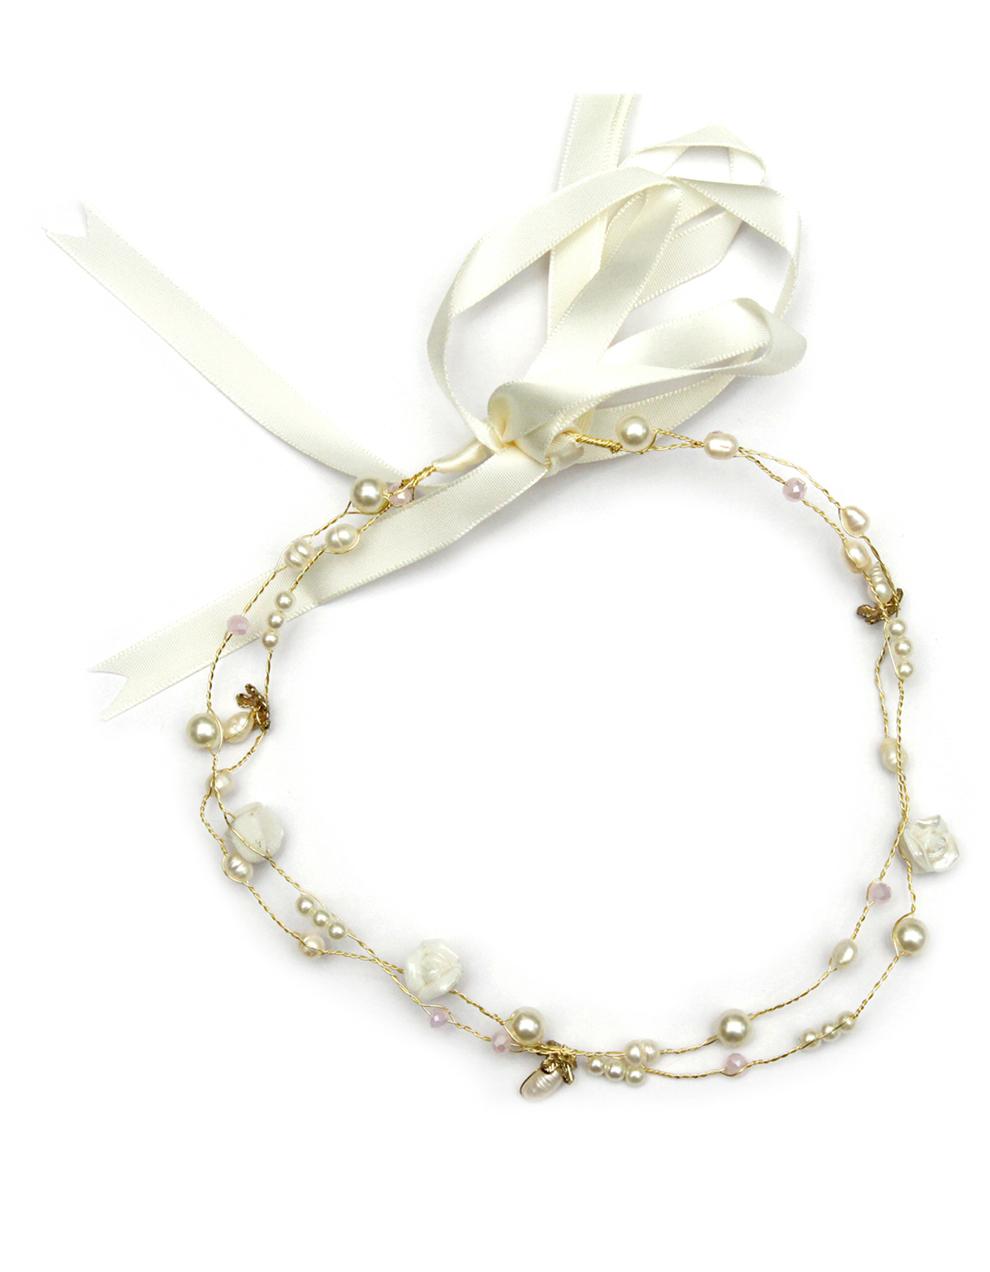 DesiButik's Beautiful 1 Pc White and Golden Hair Accessory for Bride & Bridesmaid HA1019